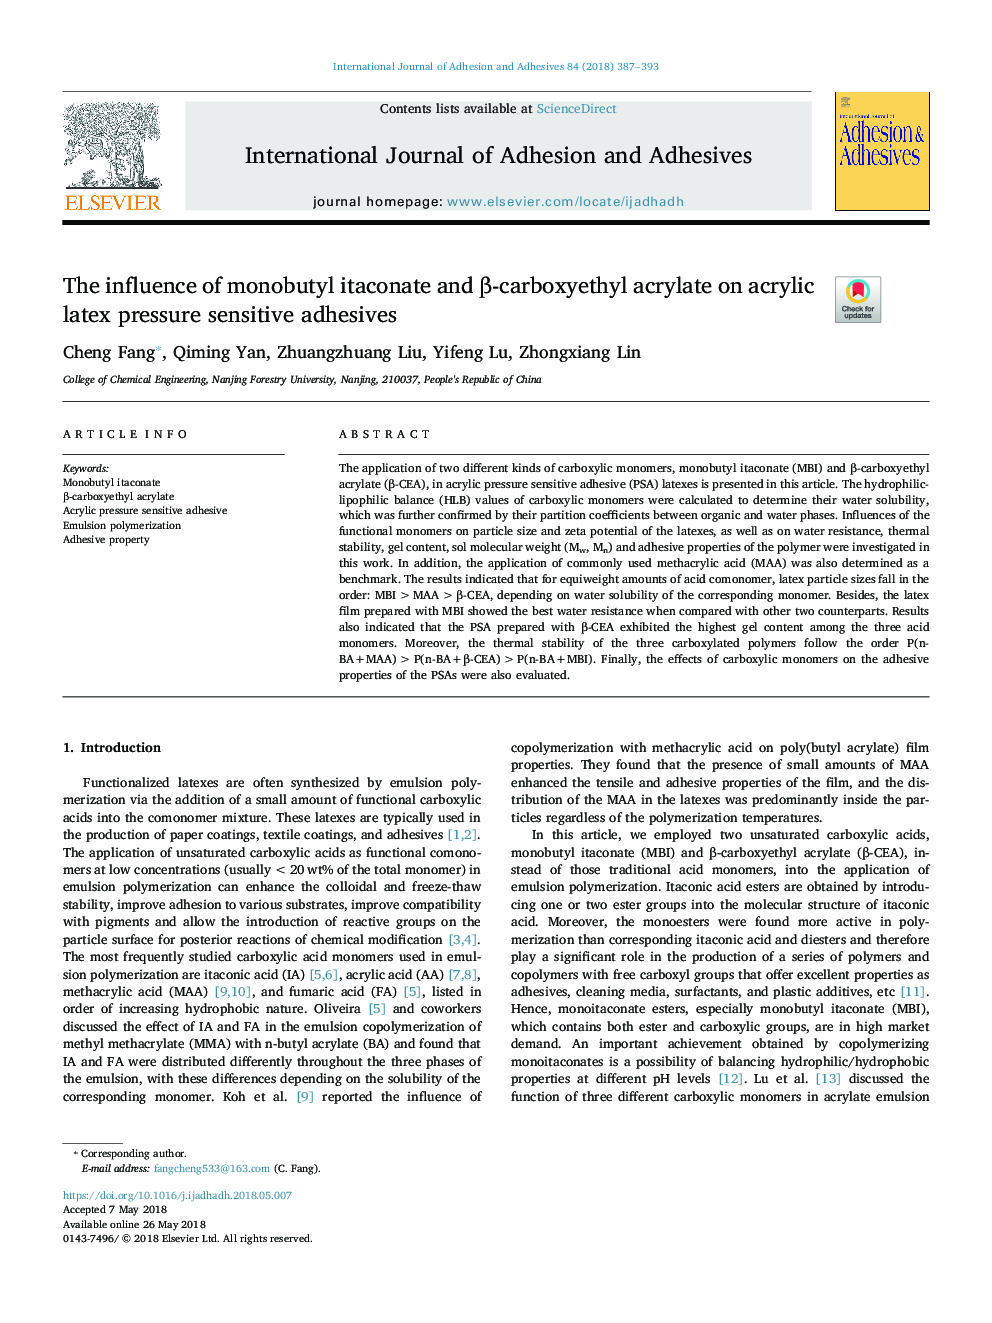 The influence of monobutyl itaconate and Î²-carboxyethyl acrylate on acrylic latex pressure sensitive adhesives